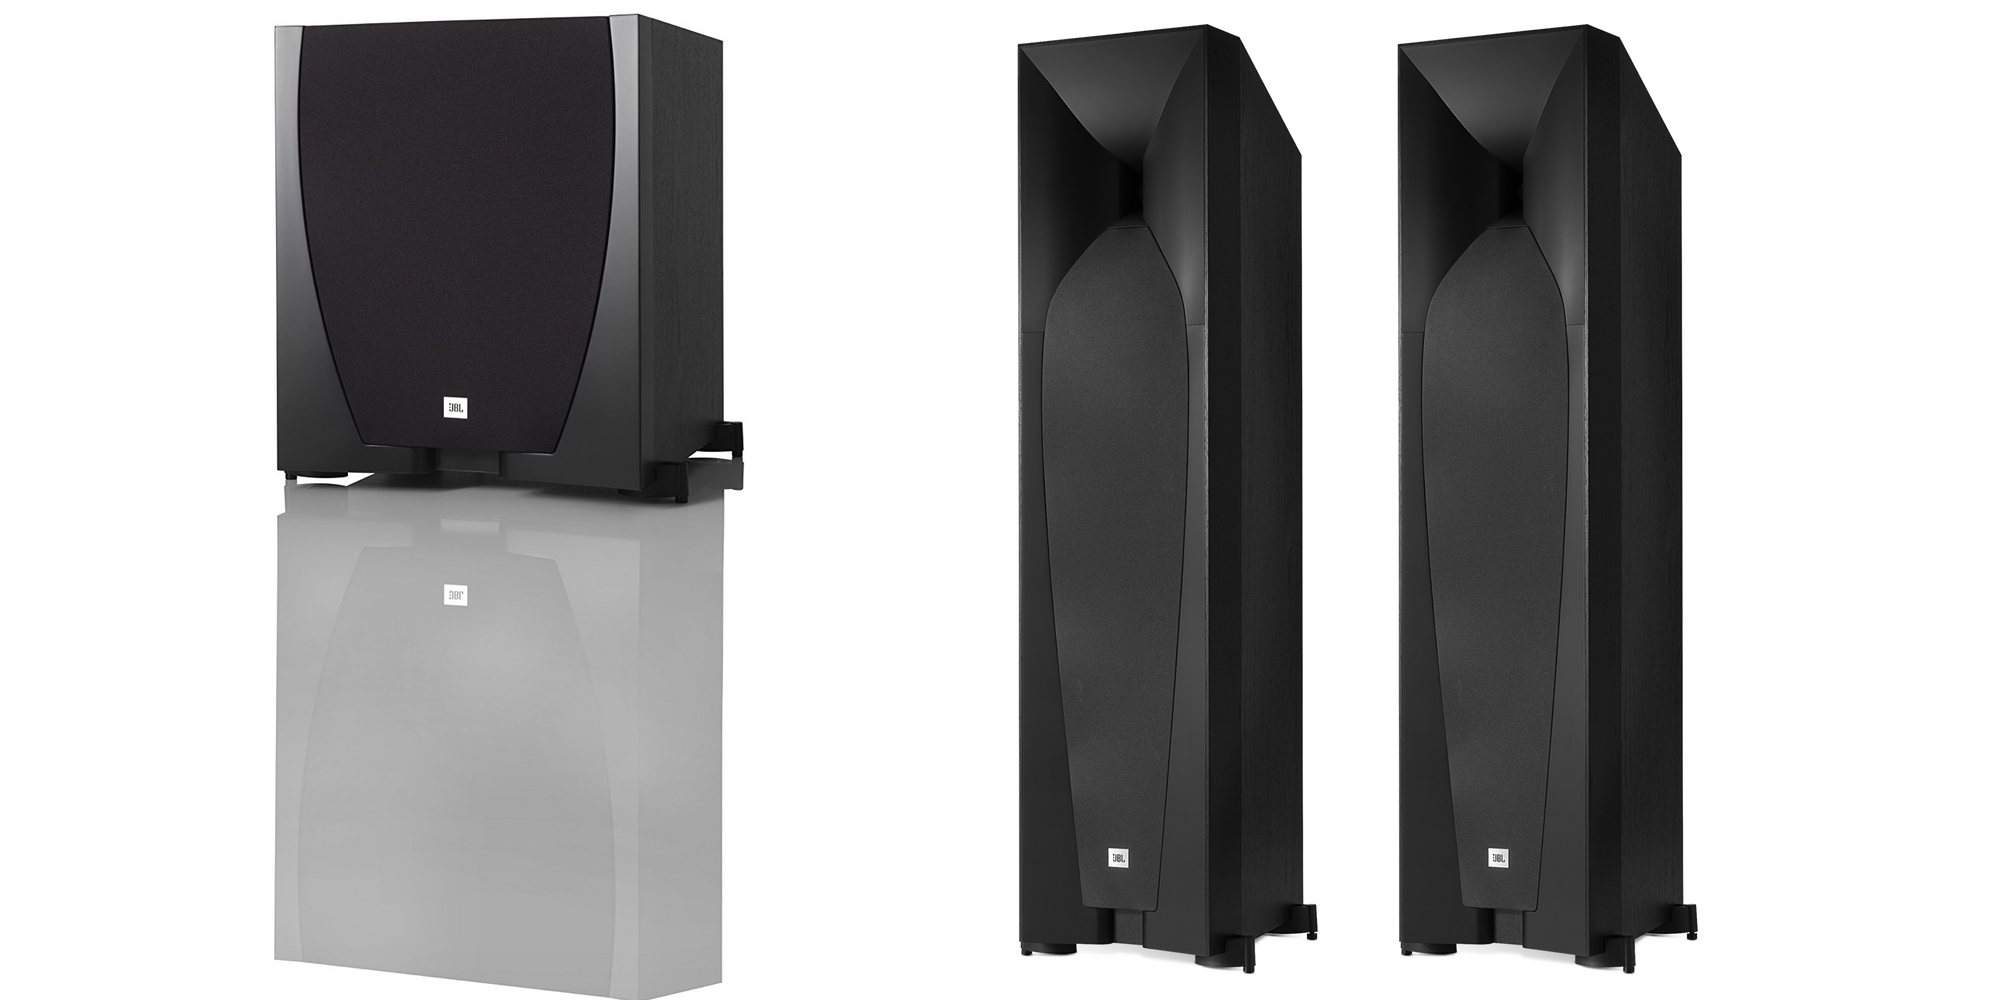 JBL Speakers: Floorstanding (pair) $259 and 10-inch Subwoofer $189